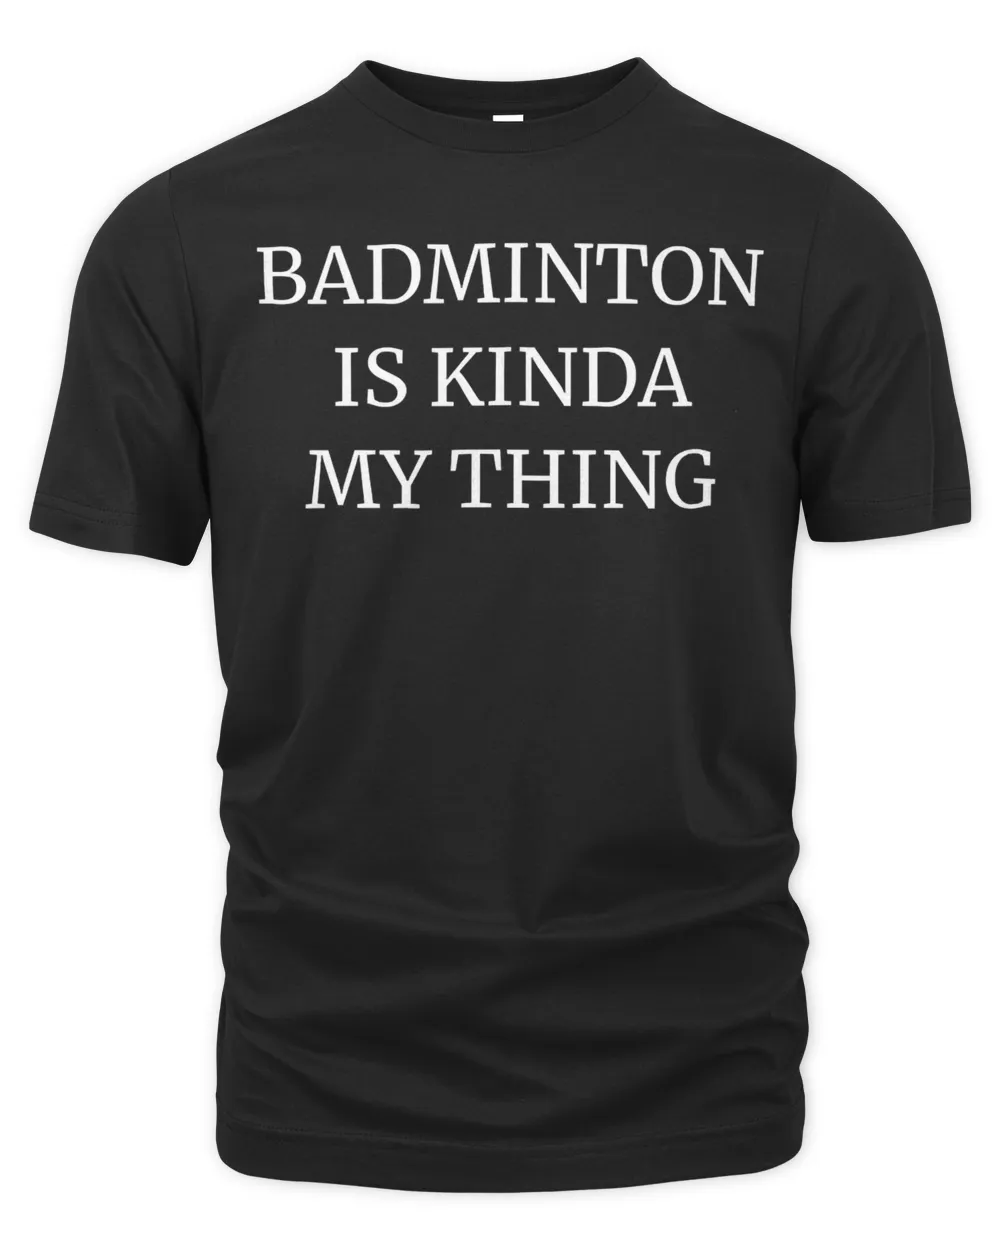 Badminton ranking t-shirt it's kinda my thing